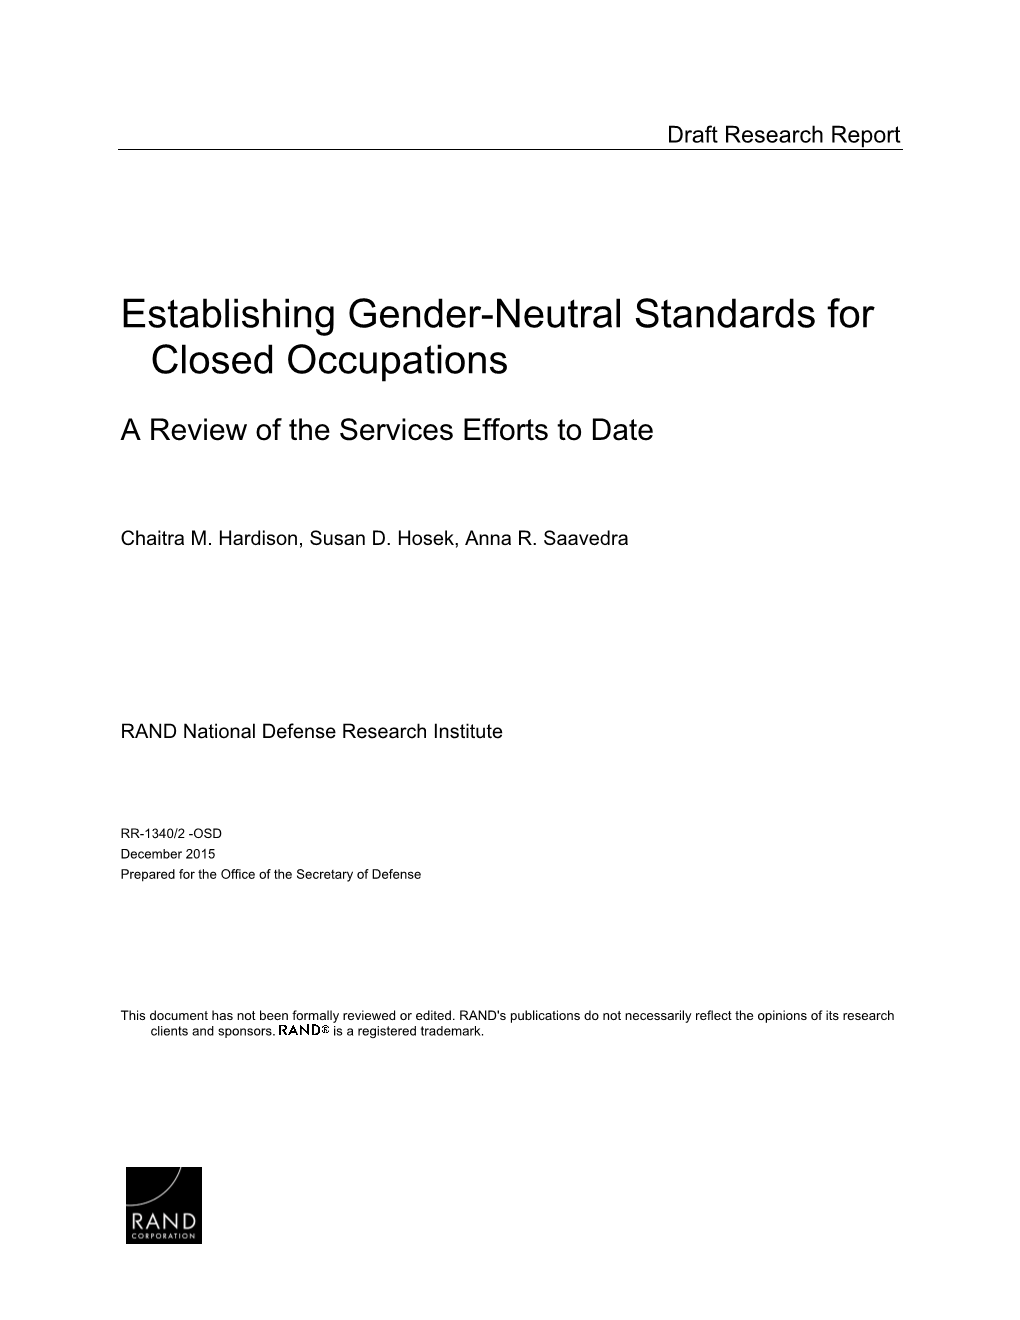 Establishing Gender-Neutral Standards for Closed Occupations